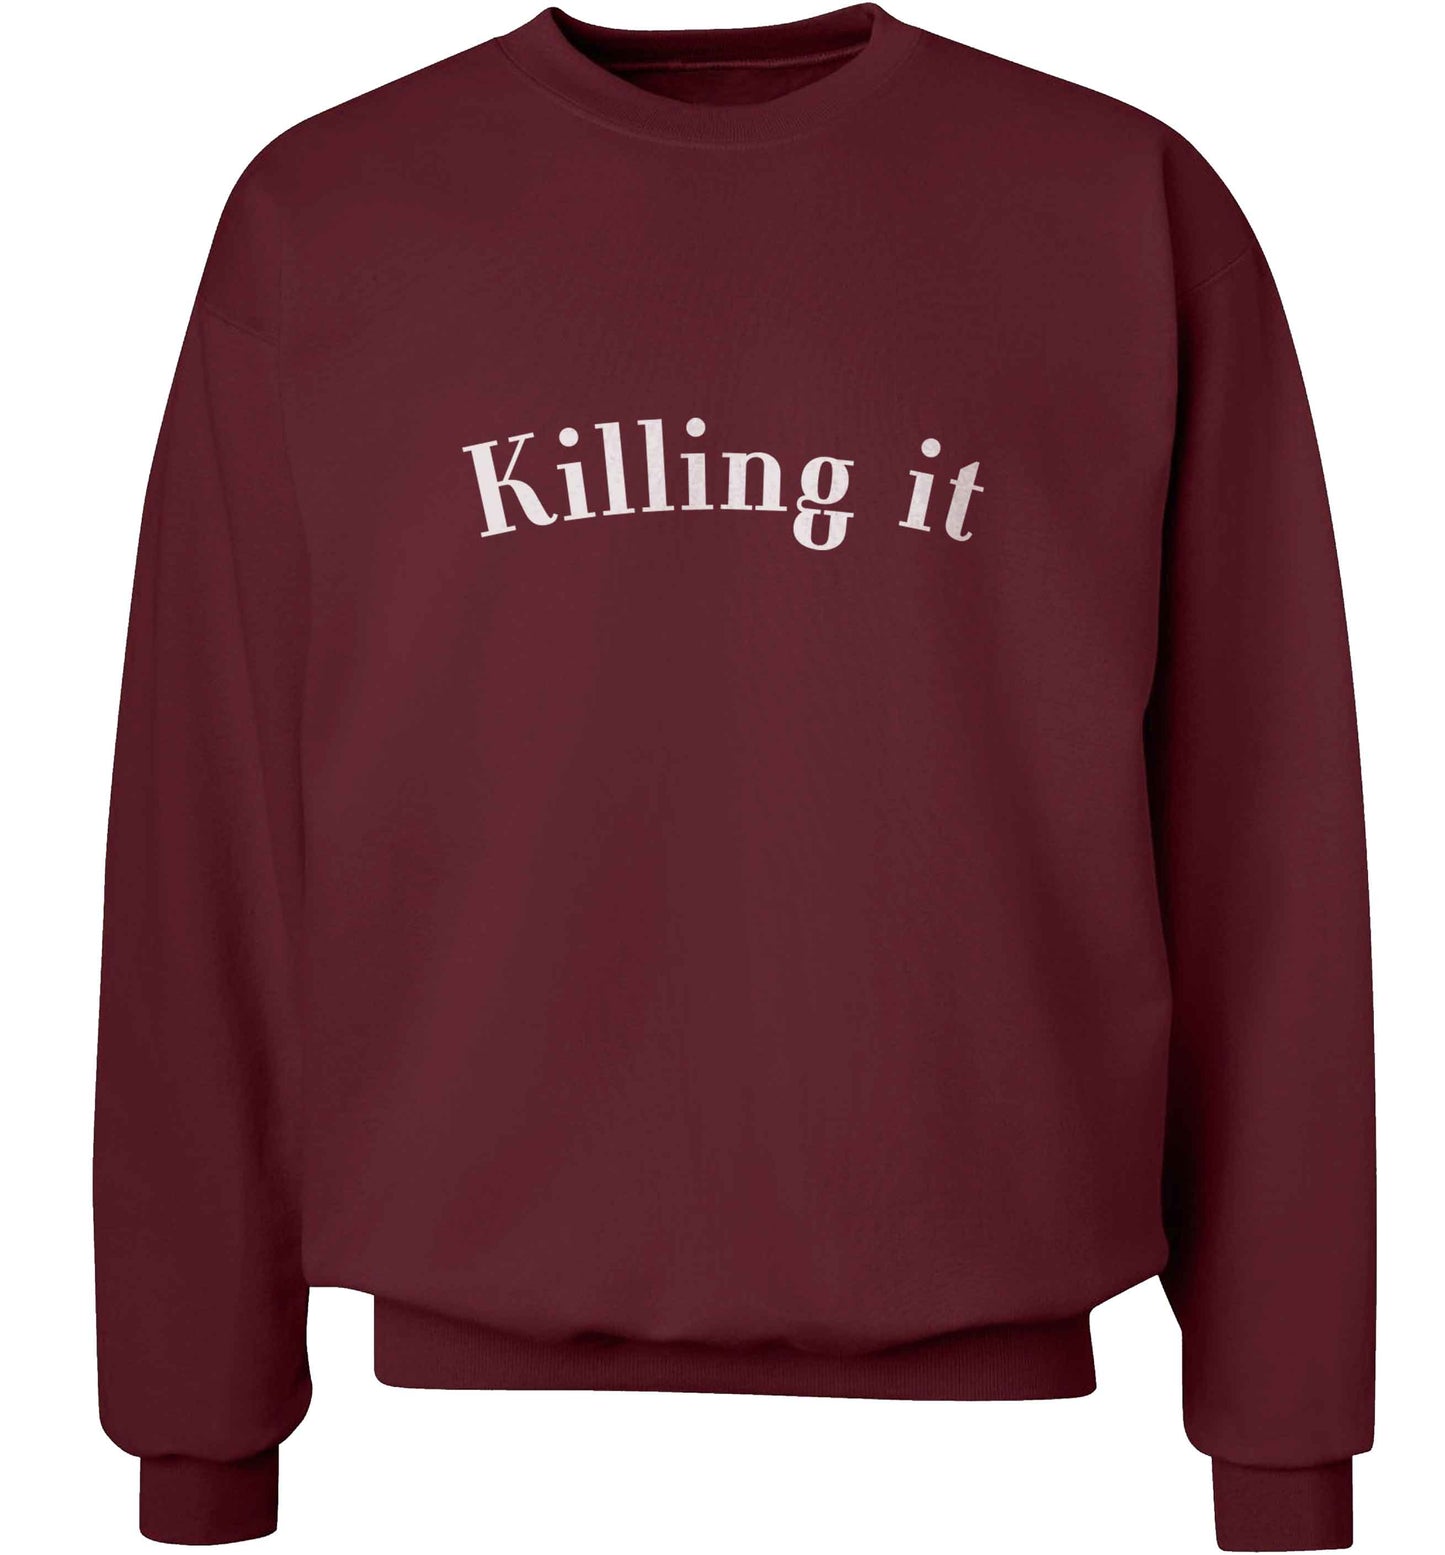 Killing it adult's unisex maroon sweater 2XL